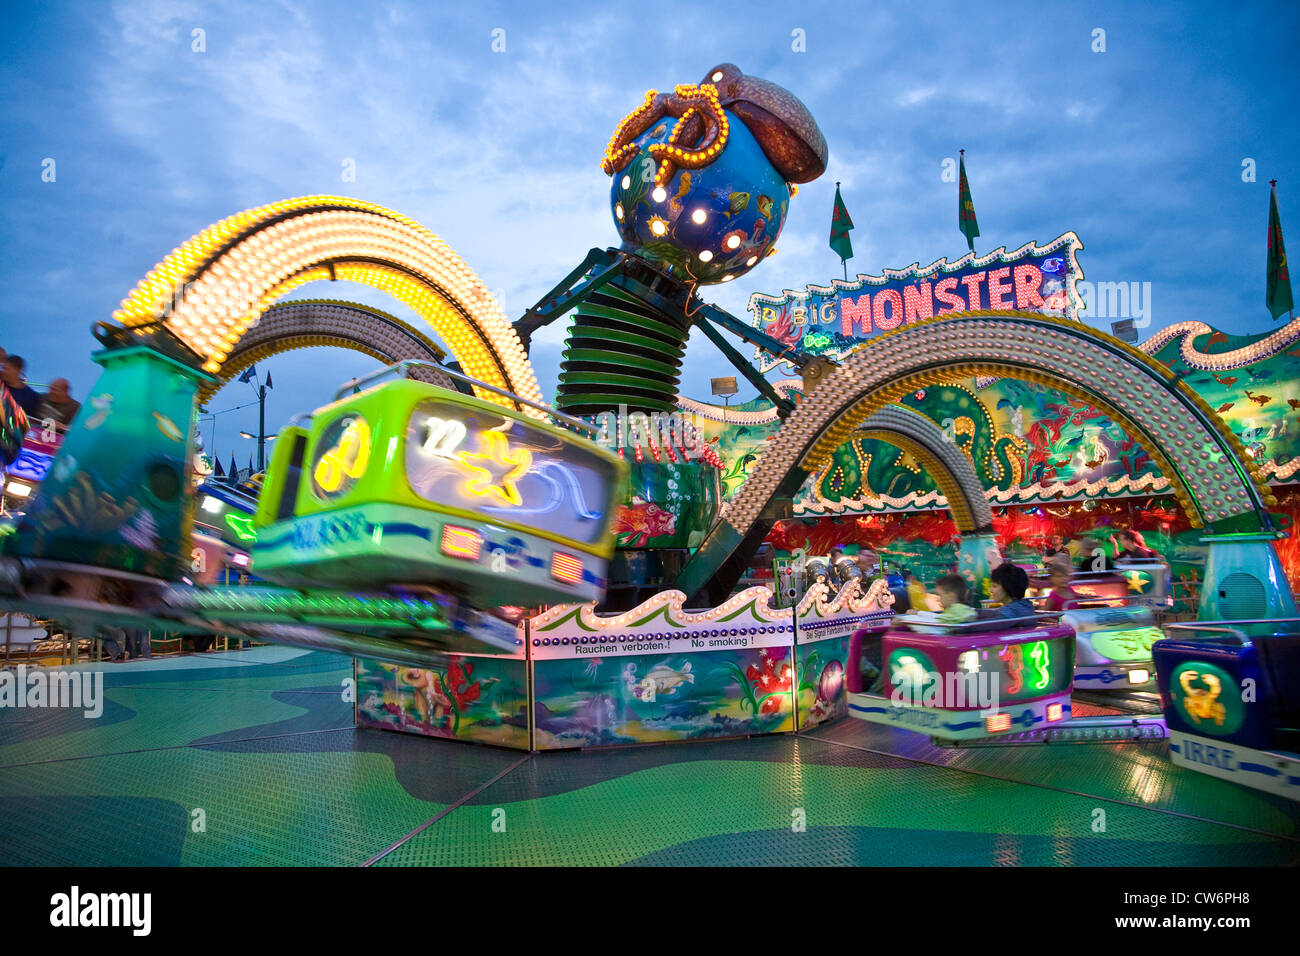 Big Monster on the Cranger fair, Germany, North Rhine-Westphalia, Ruhr Area, Herne Stock Photo